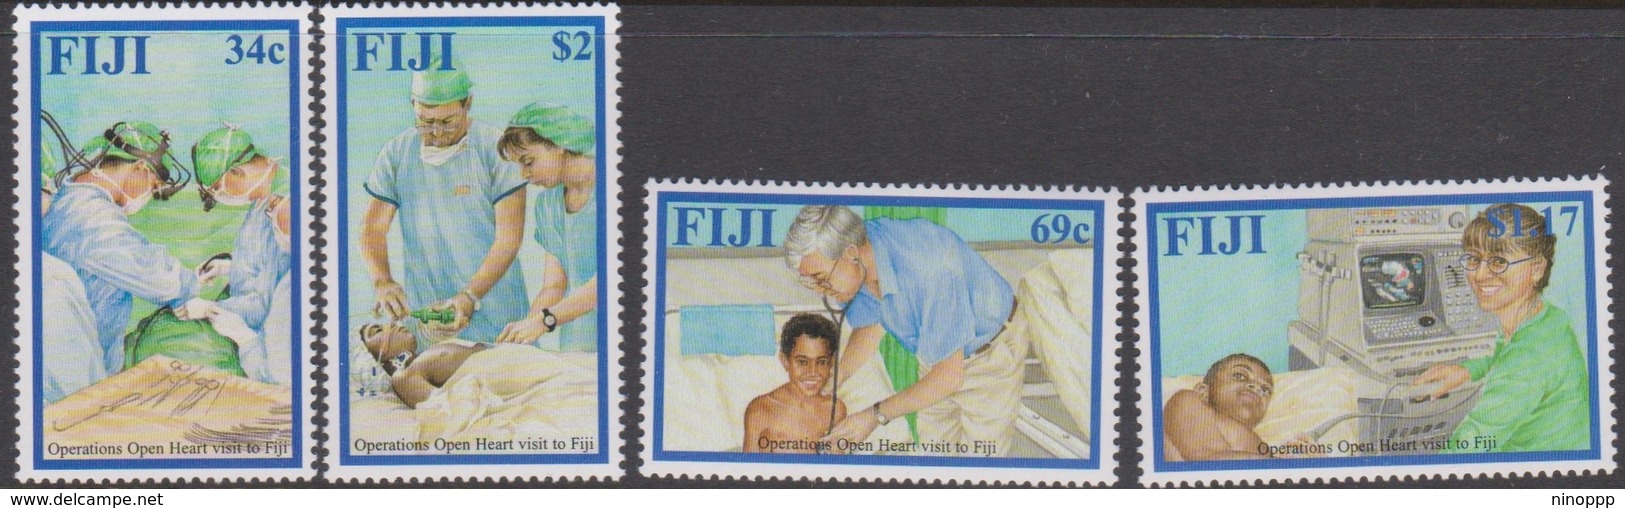 Fiji SG 1174-1177 2002 Open Heart Operation, Mint Never Hinged - Fiji (1970-...)